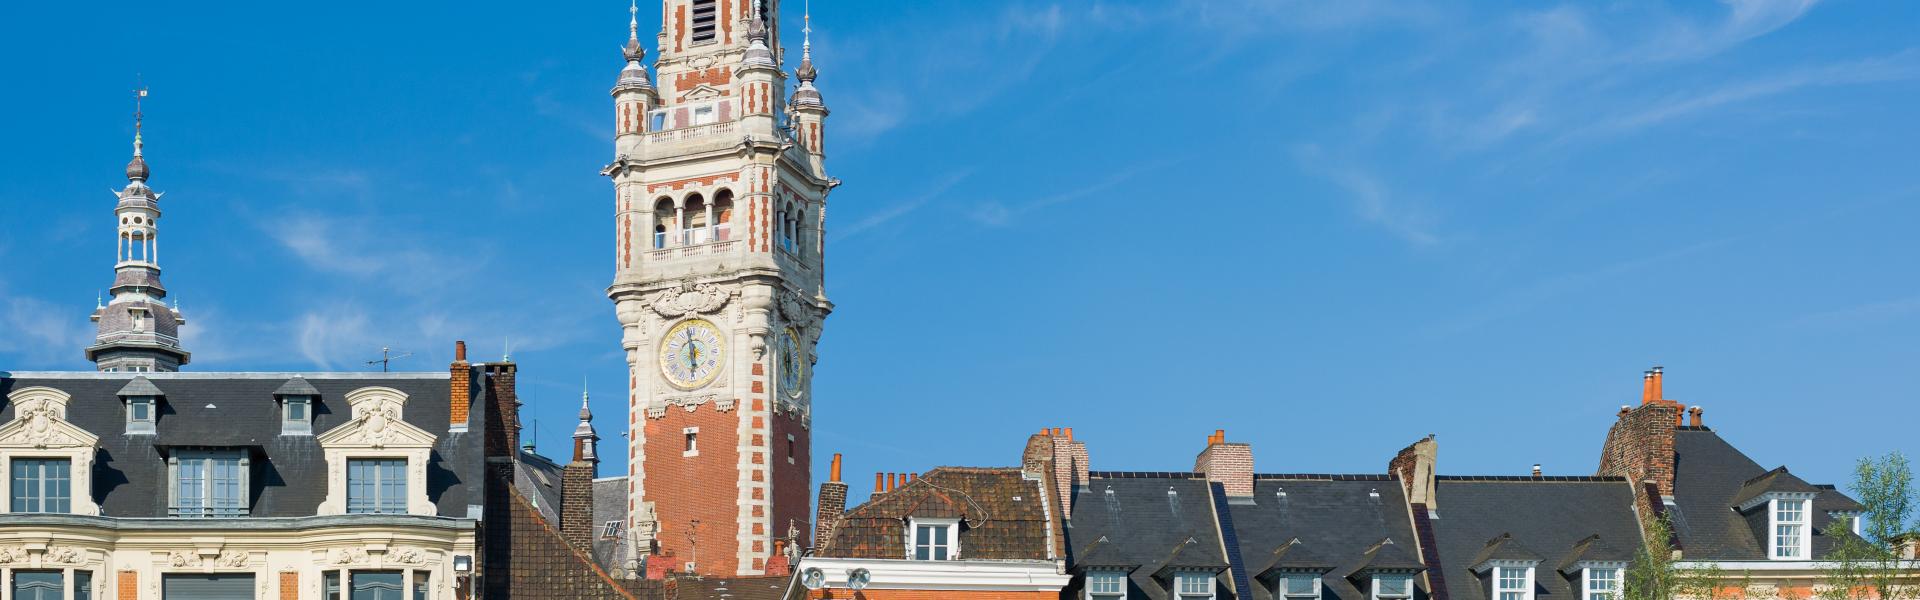 Appartementen in Lille, stedentripje vol cultuur en Franse flair - Casamundo